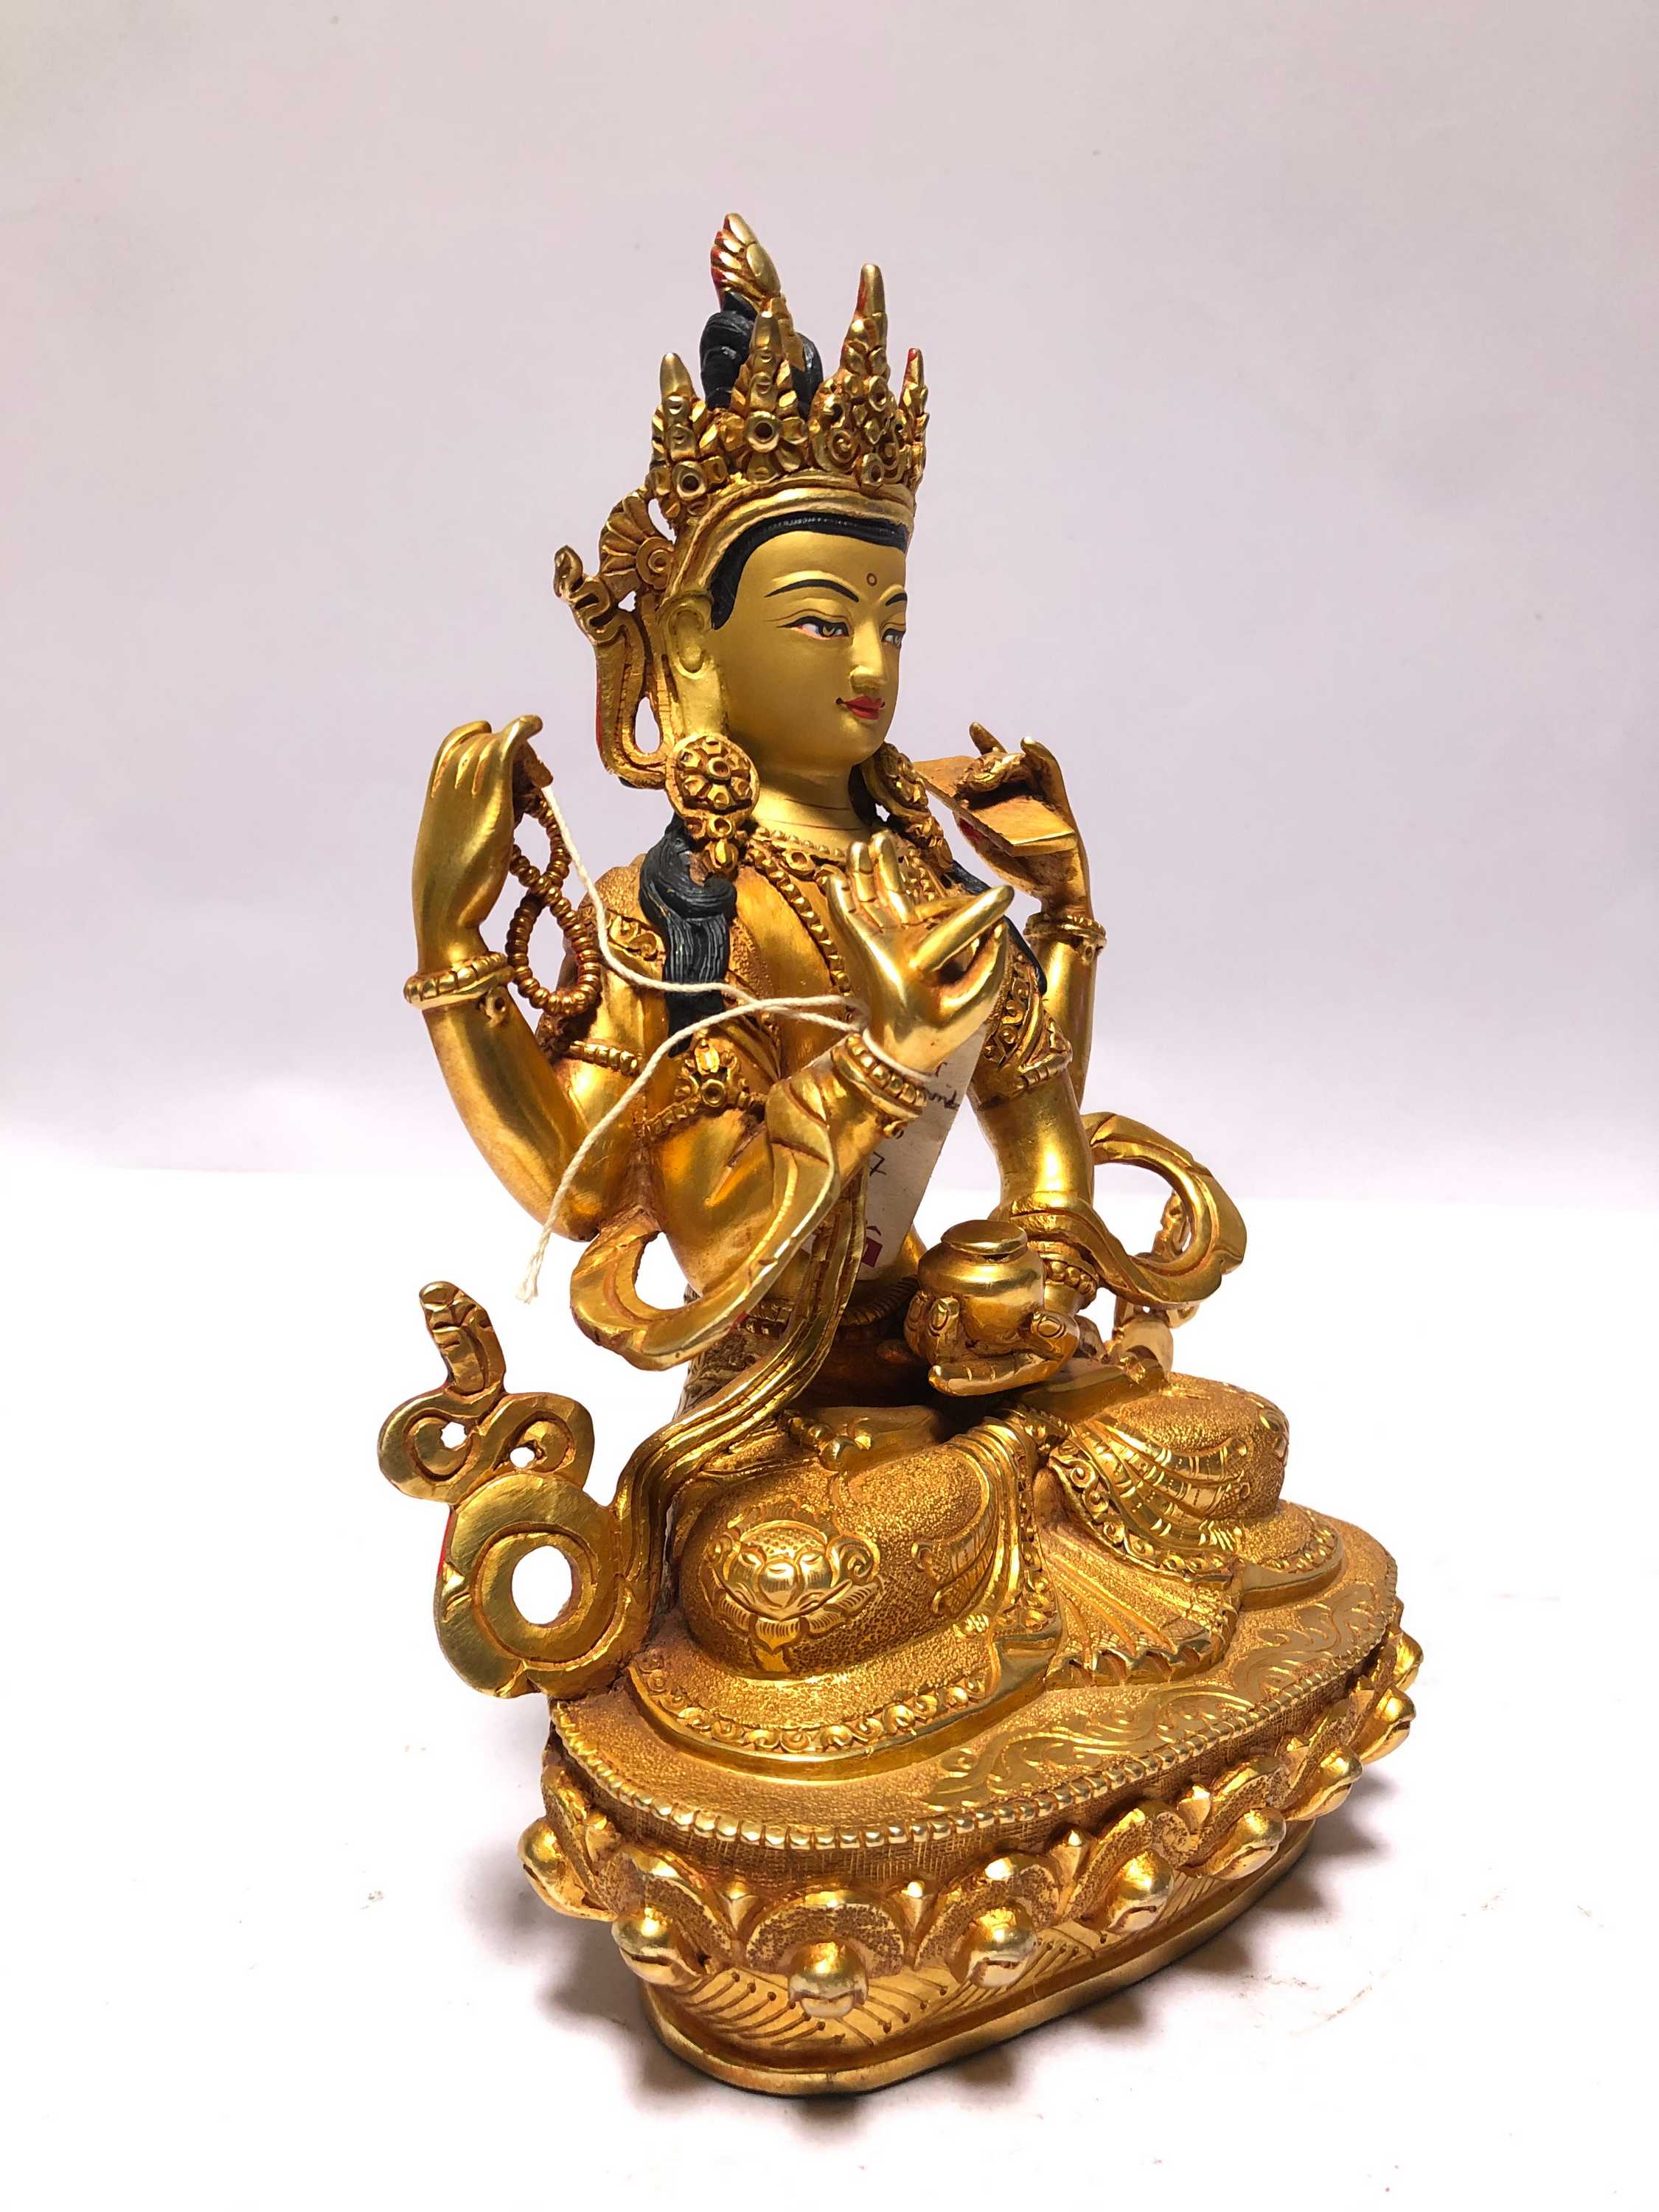 monastery Quality Buddhist Statue Of Prajnaparamita full Fire Gold Plated, painted Face, Pragya Parmita